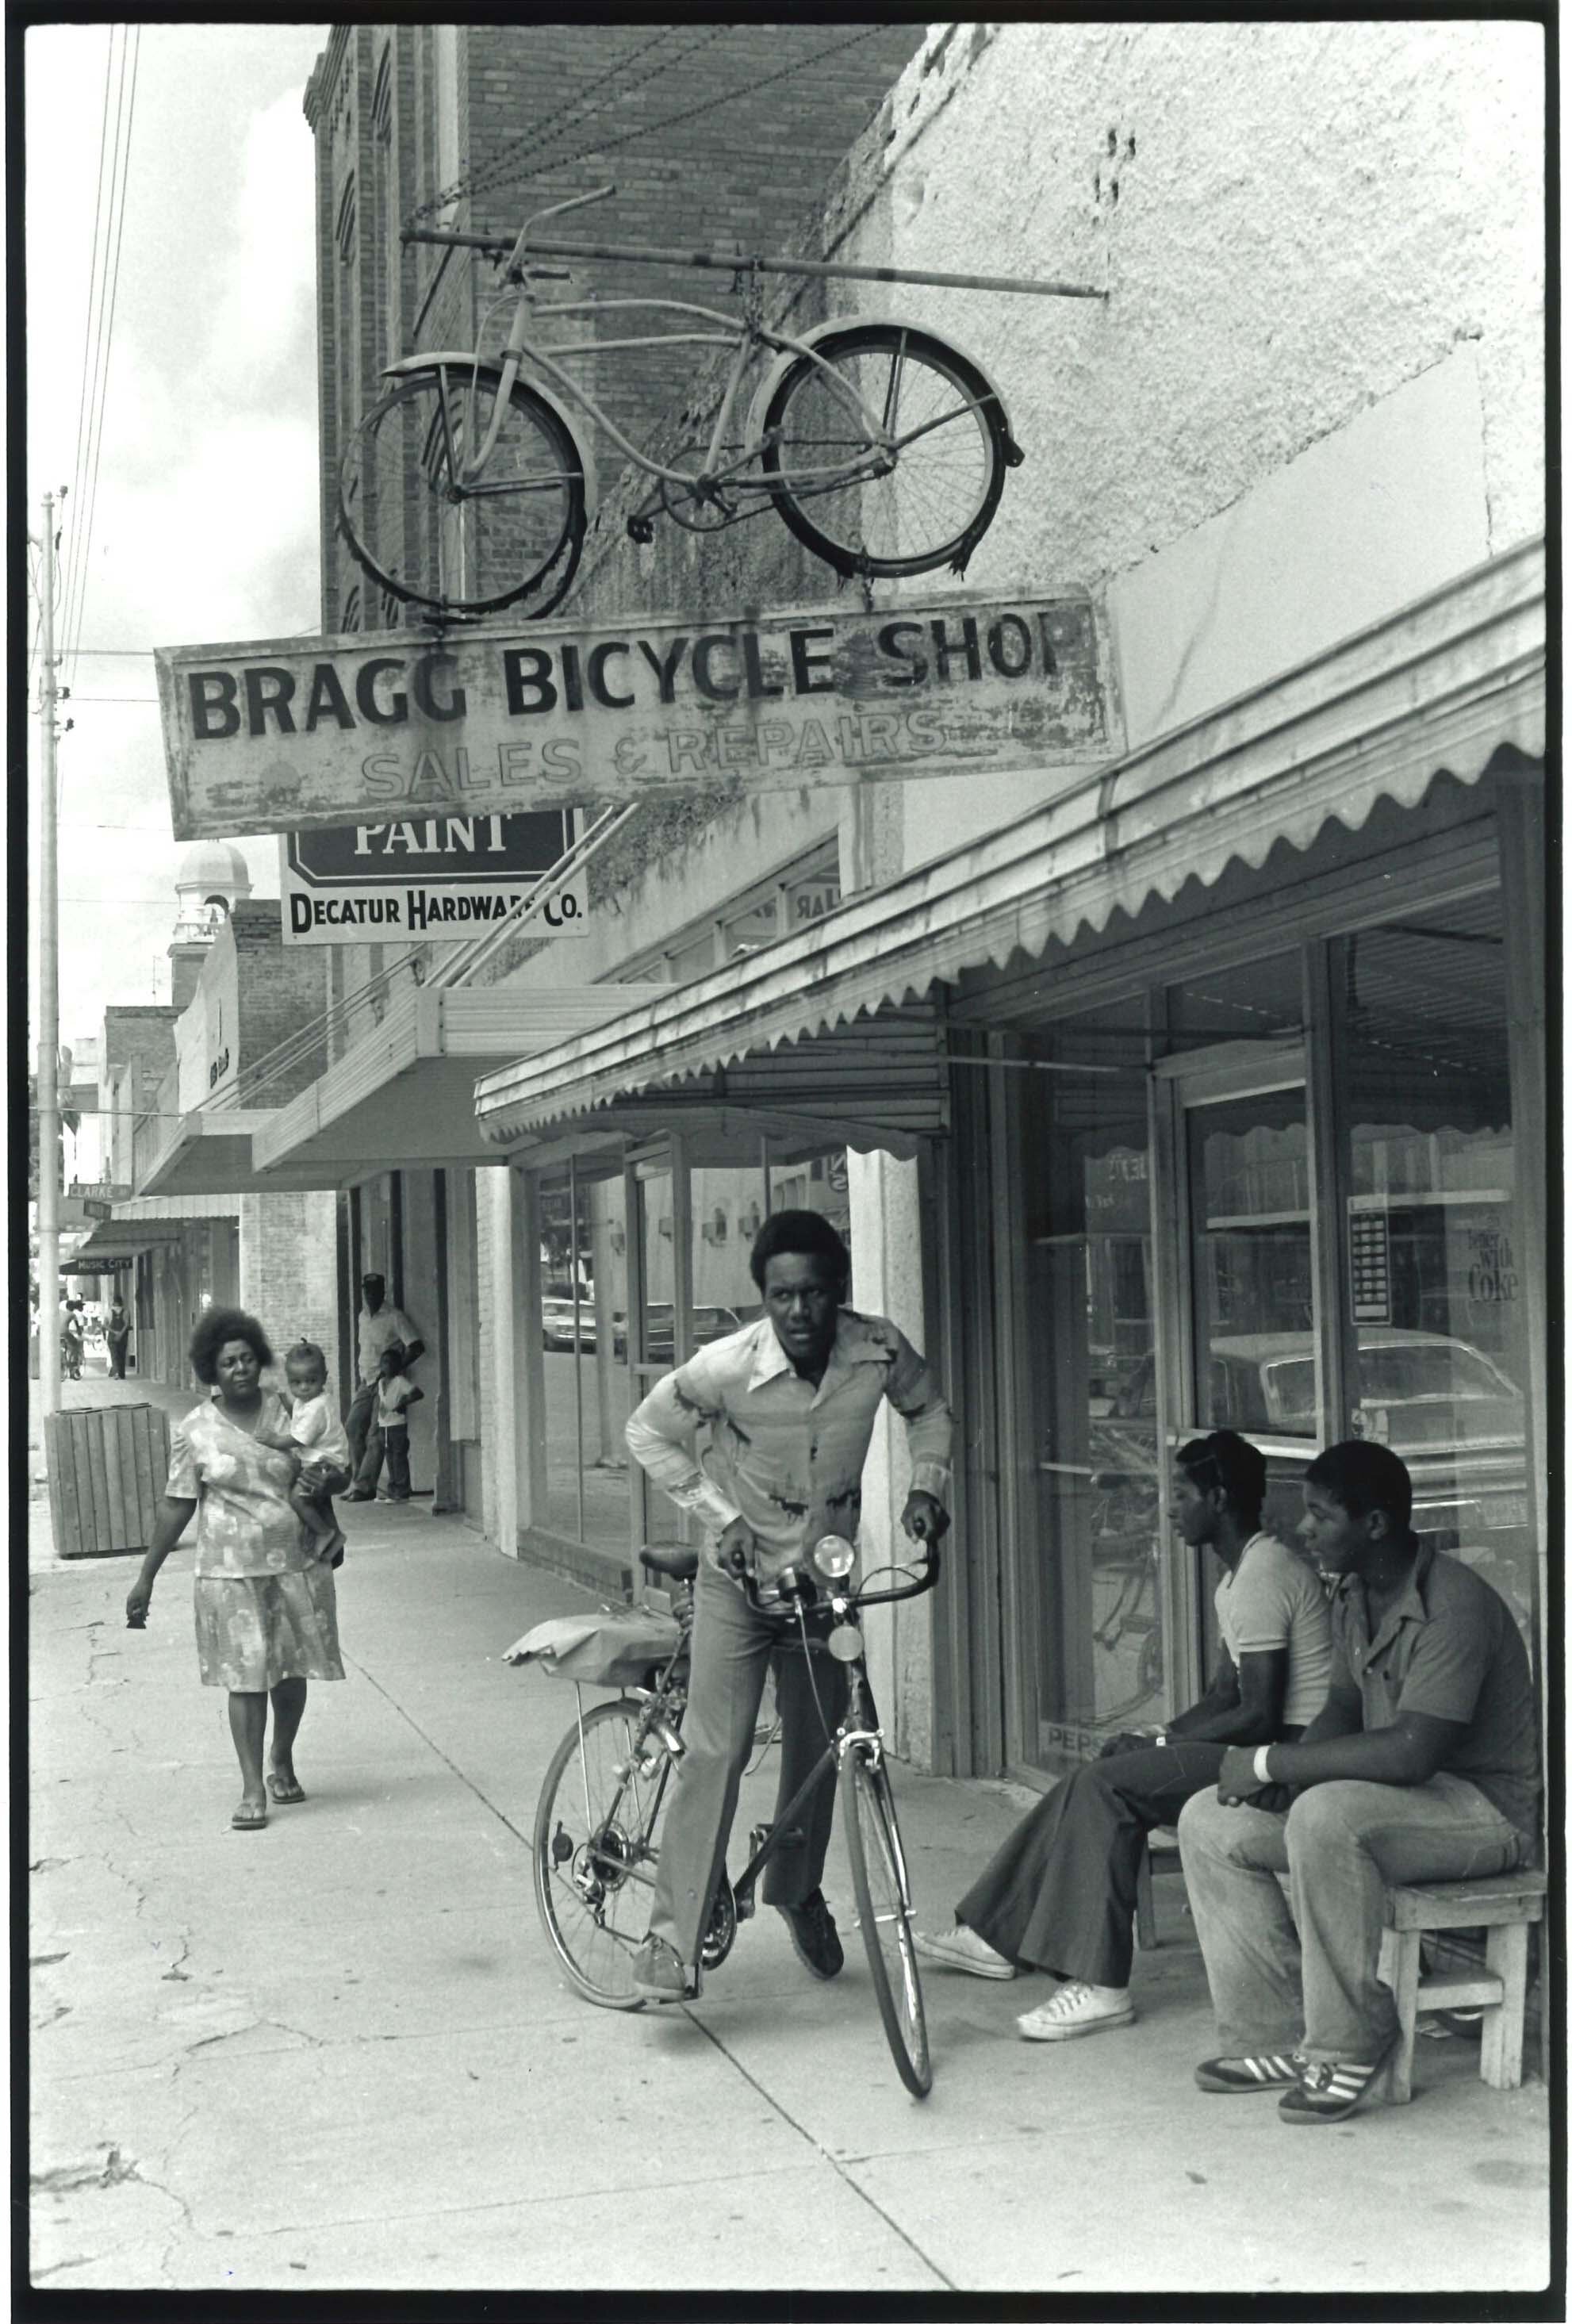   Bragg Bicycle Shop on Water Street Looking West, Bainbridge, GA  Image: 1979/printed: 2020 Gelatin silver print 9 3/4 x 6 1/2 in. (image size)  The Do Good Fund, Inc., 2020-061 